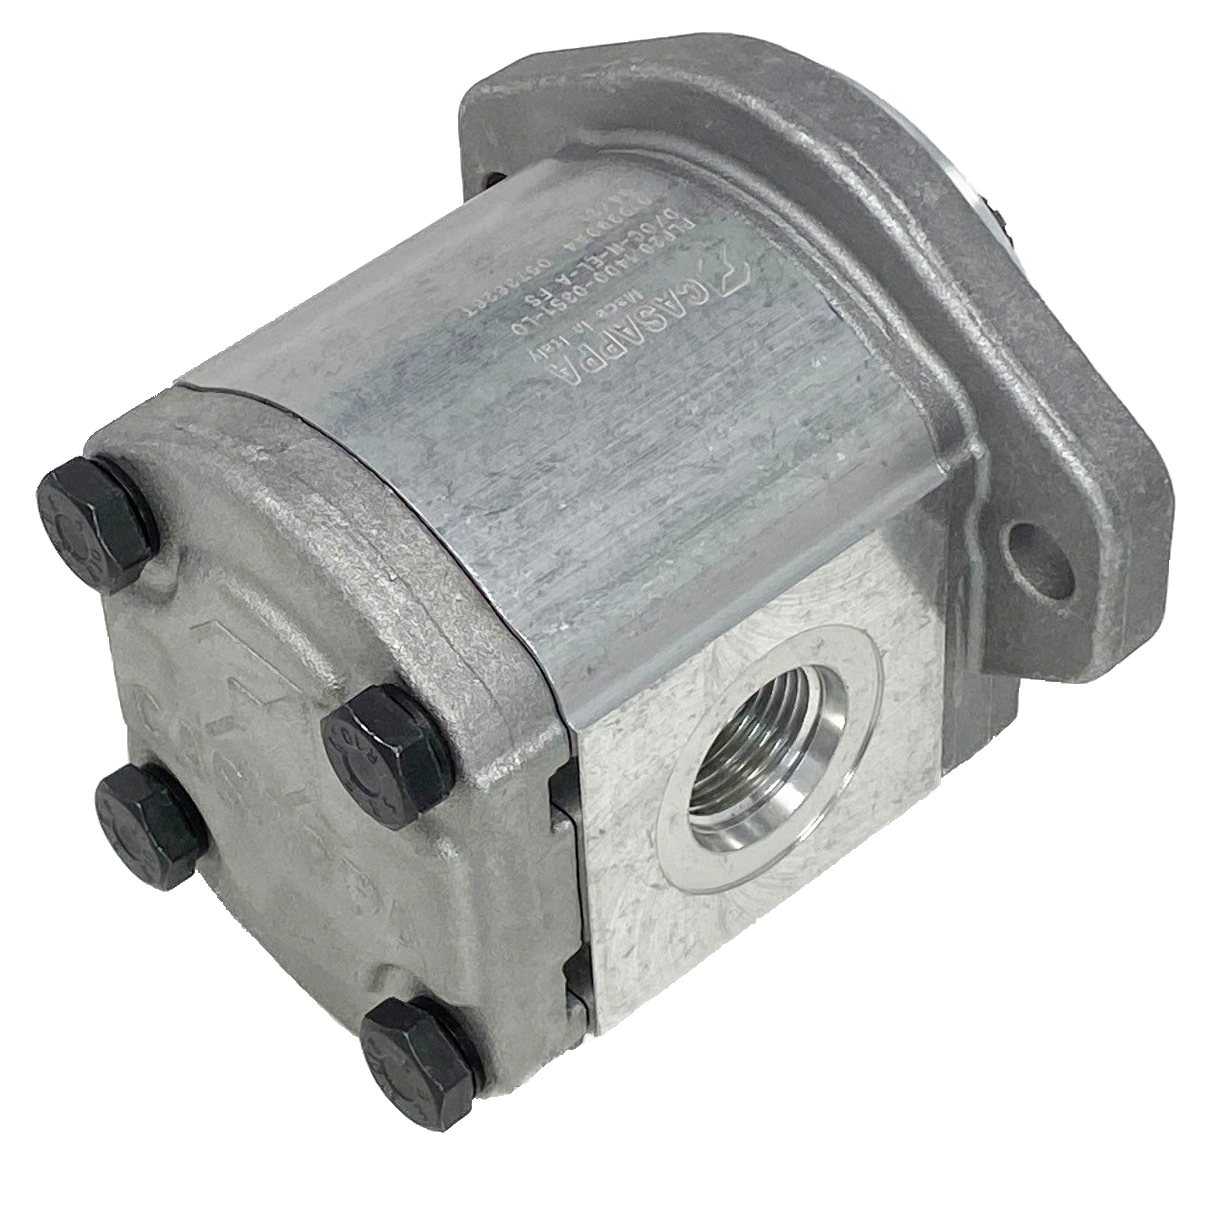 PLM20.20R0-07S1-LOC/OD-N-EL : Casappa Polaris Gear Motor, 21.14cc, 2900psi Rated, 3000RPM, Reversible Rear External Drain, 11T 16/32dp Shaft, SAE A 2-Bolt Flange, 0.625 (5/8") #10 SAE Inlet, 0.75 (3/4") #12 SAE Outlet, Aluminum Body & Flange